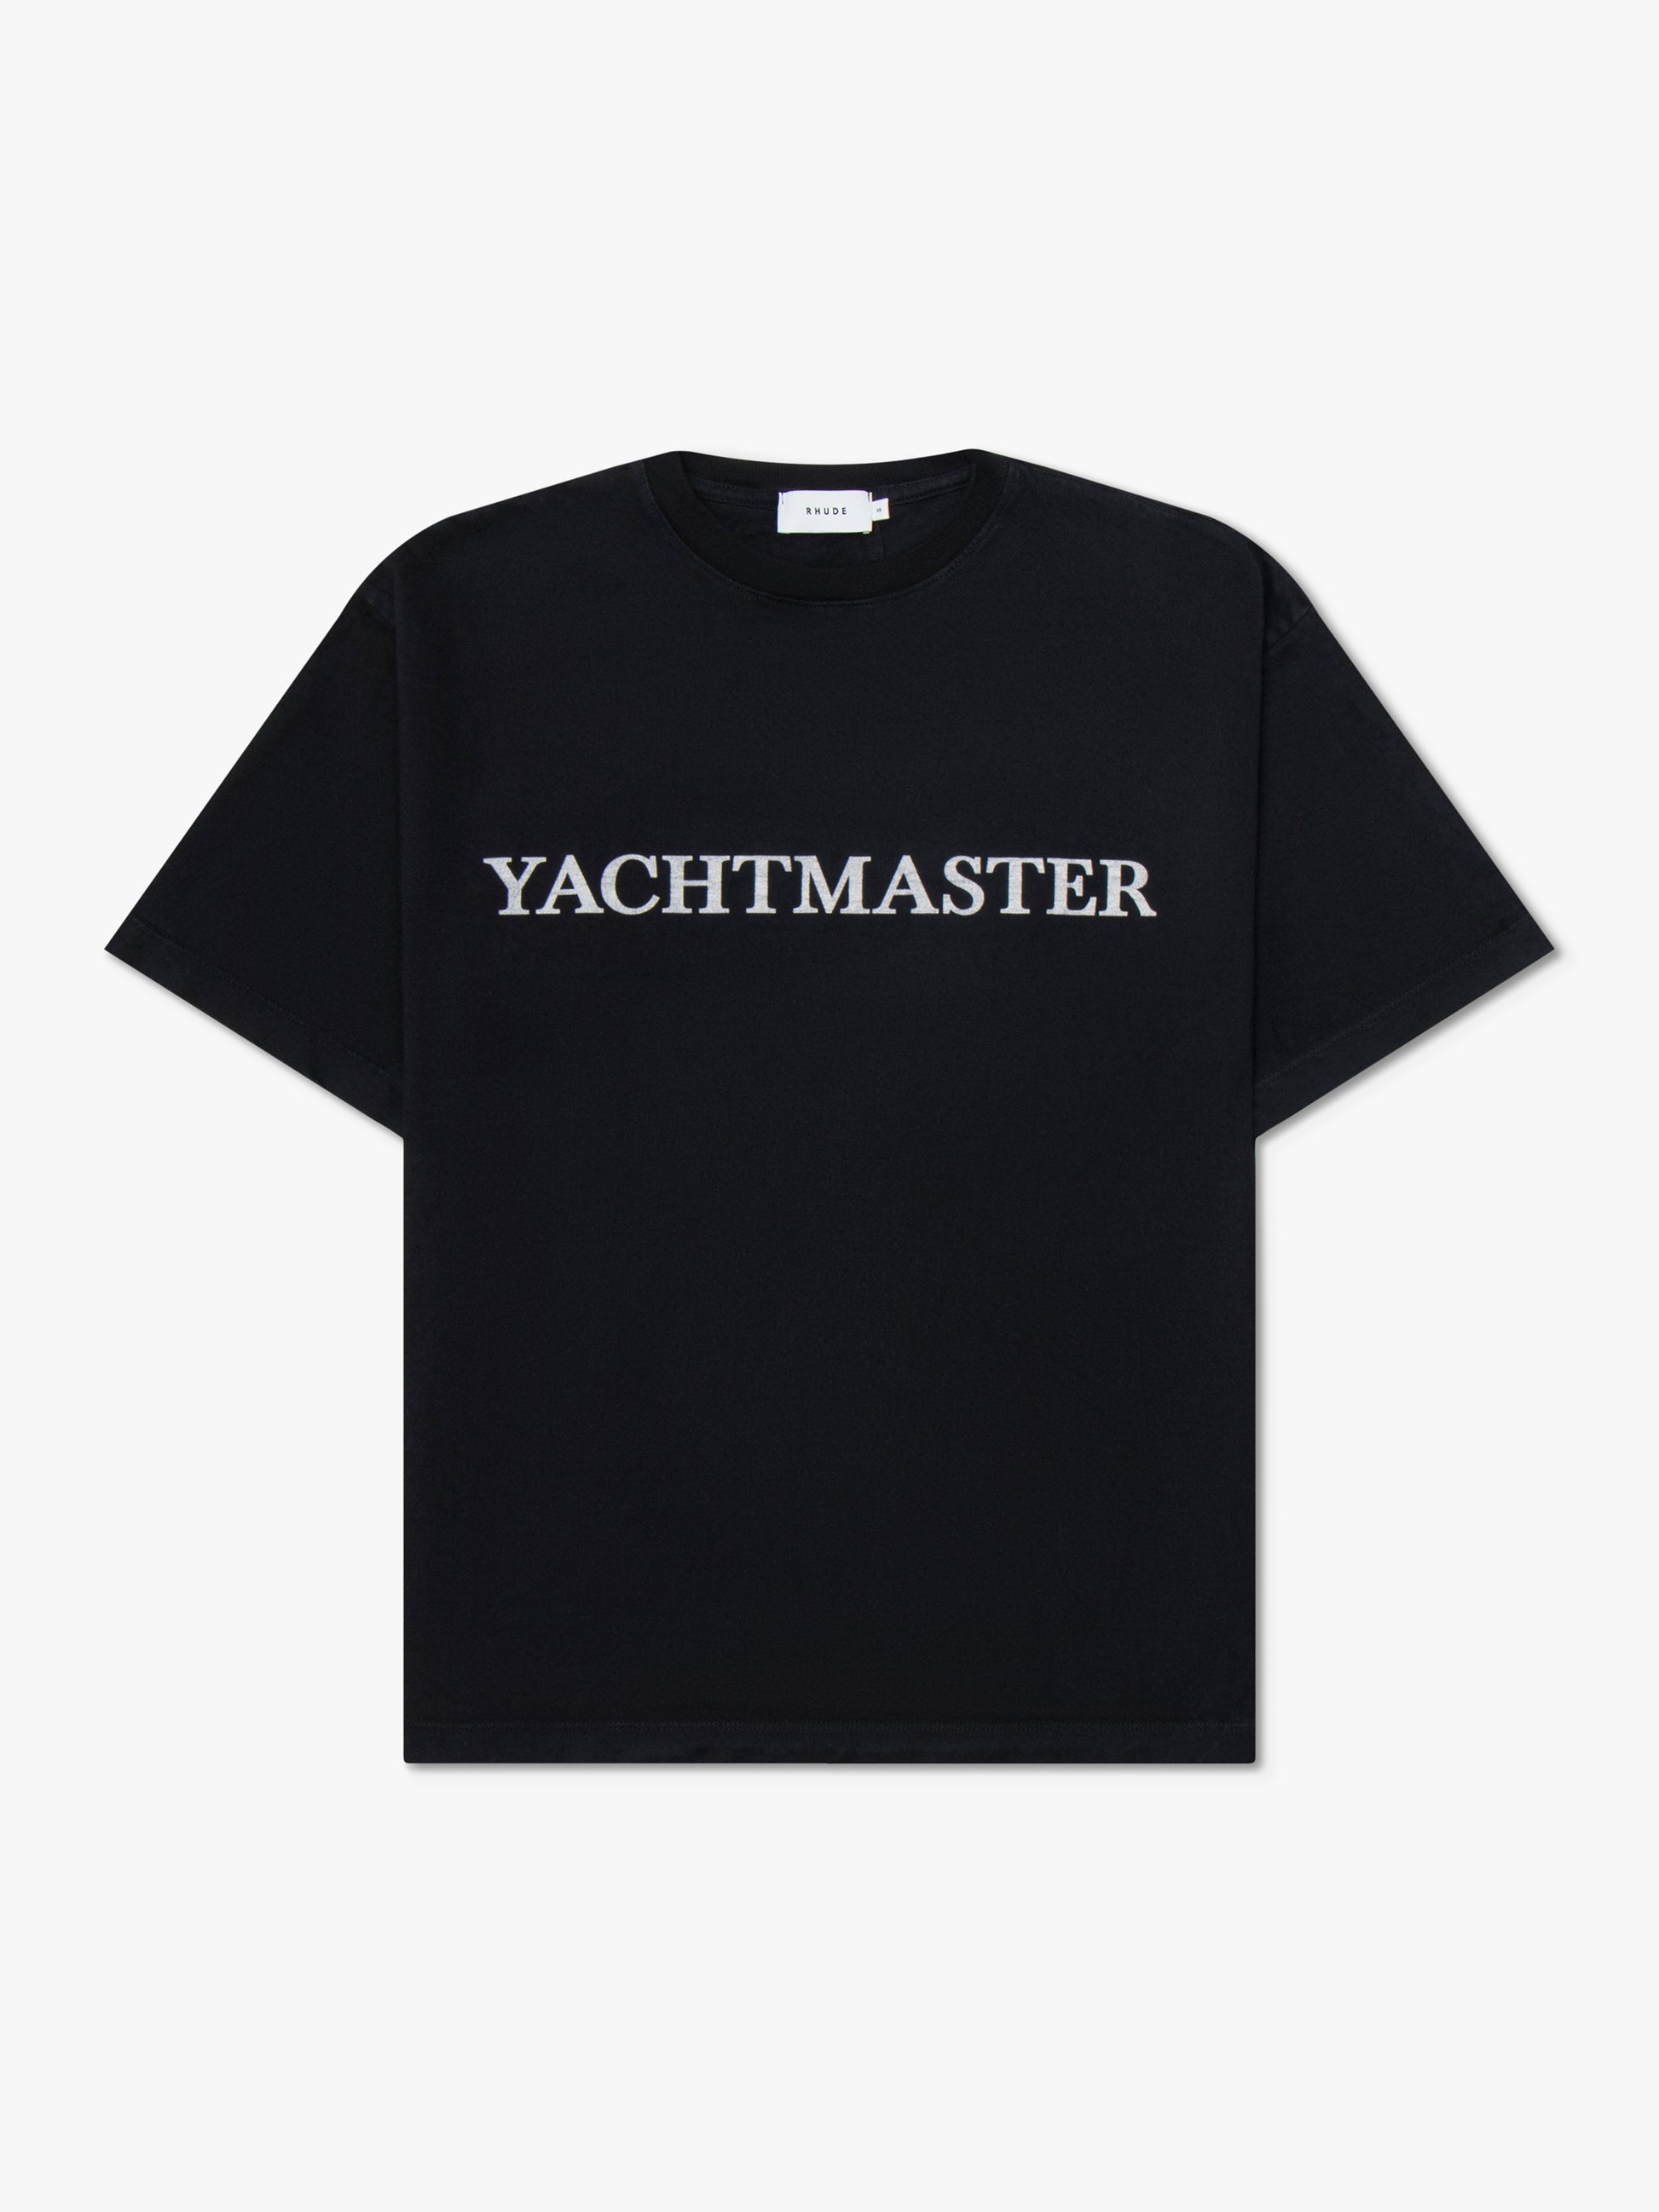 YACHTMASTER TEE - VTG BLACK